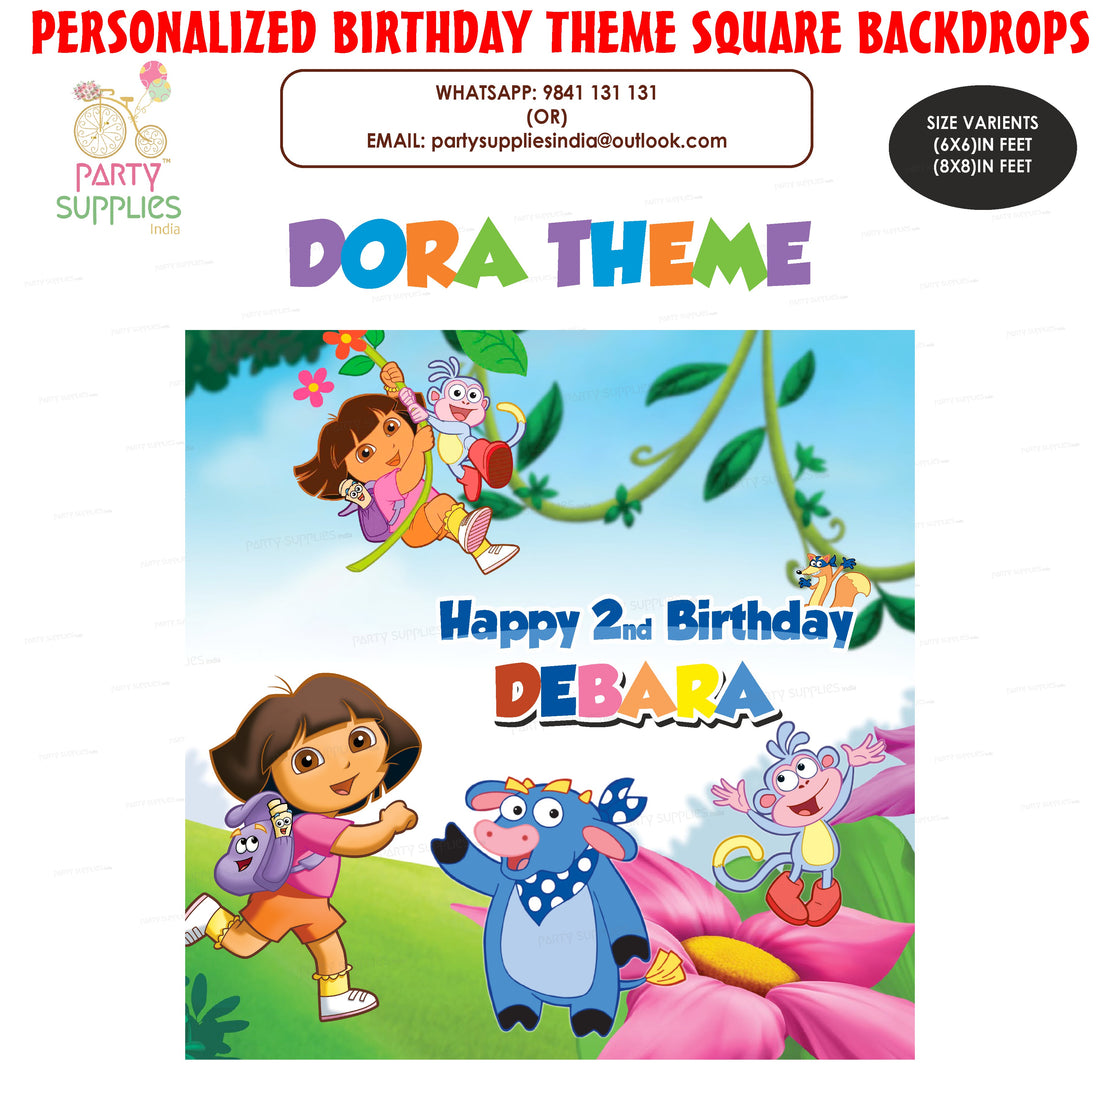 PSI Dora Theme Customized Square Backdrop